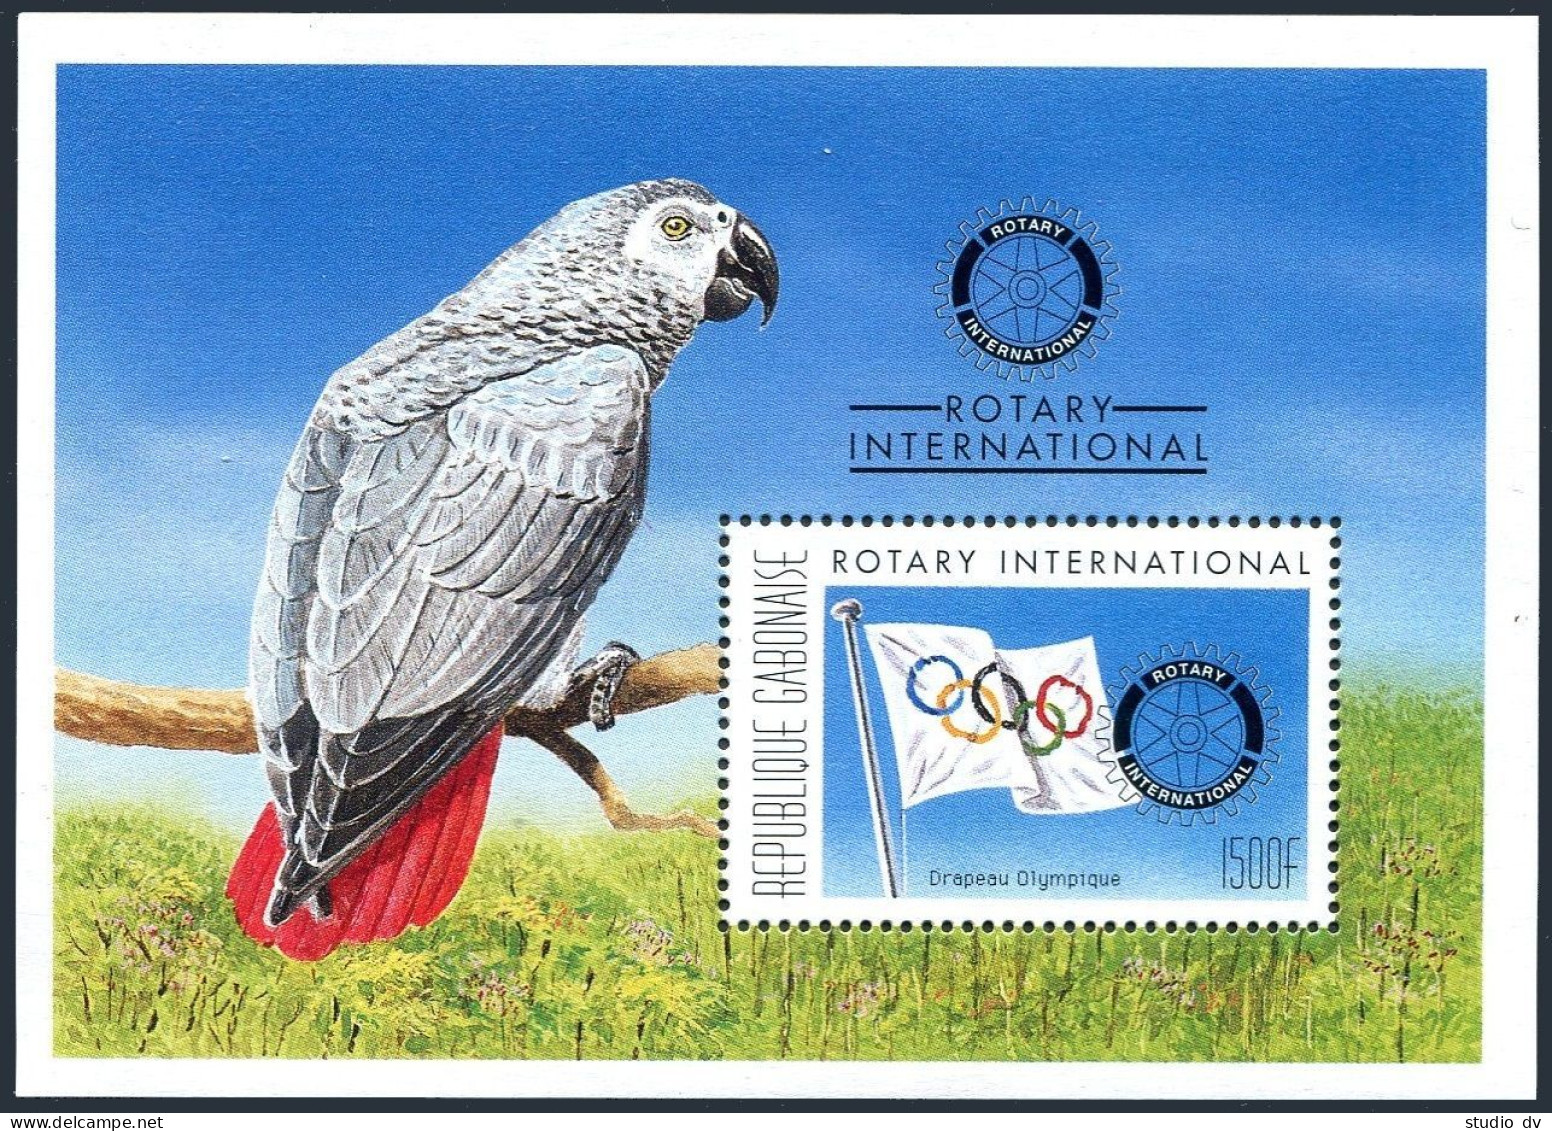 Gabon 821, MNH. Rotary International 1996. Emblem. Olympic Flag, Parrot. - Gabon